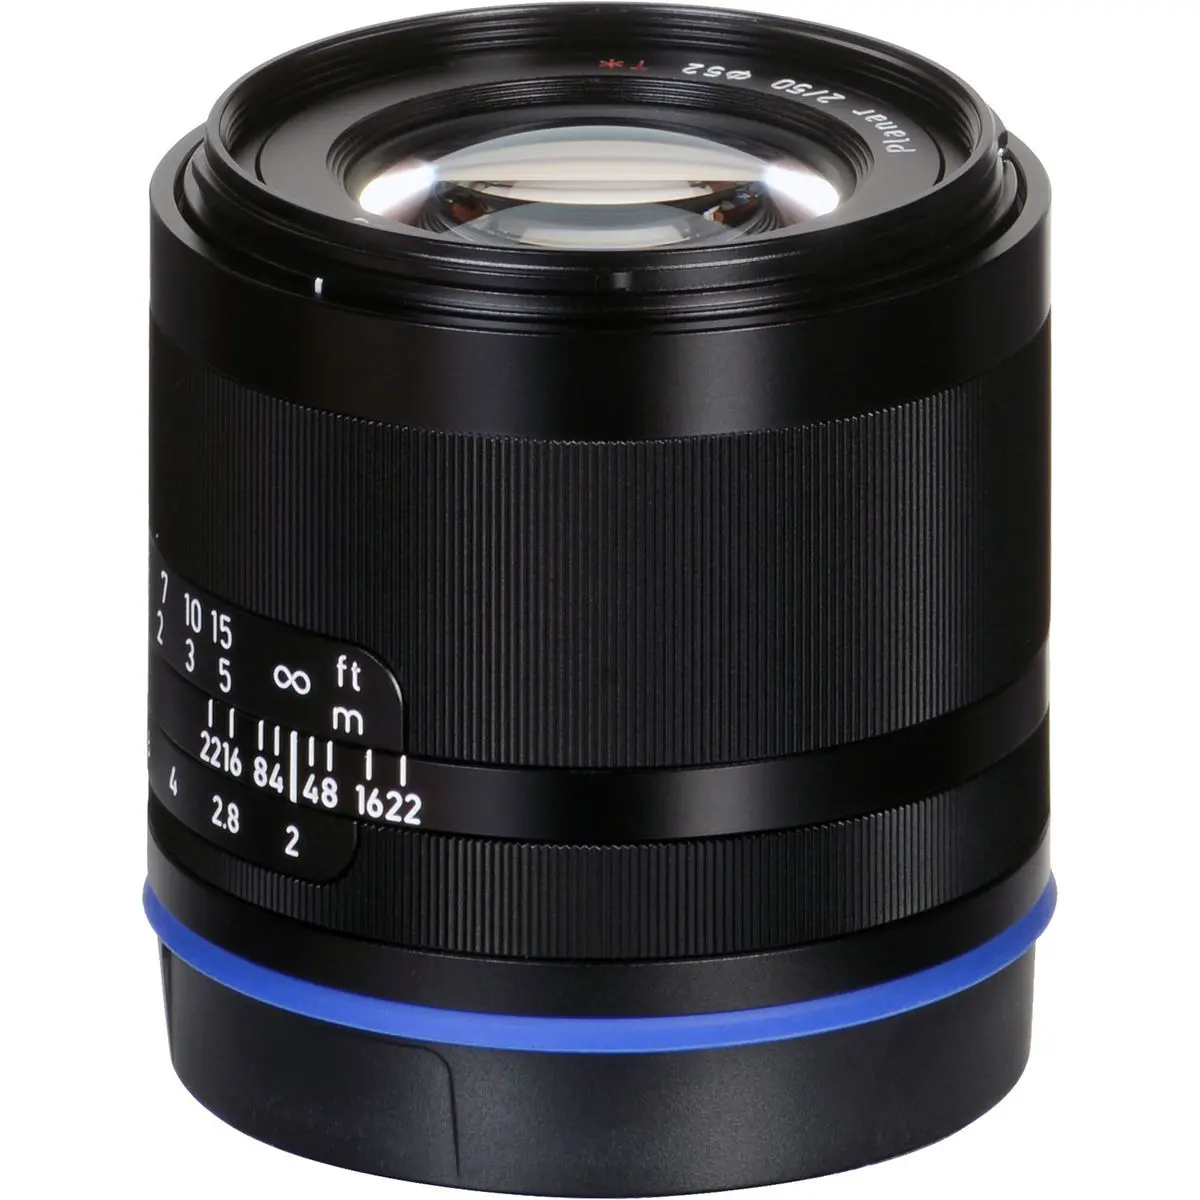 12. Carl Zeiss Loxia 50mm f/2 Planar T* (Sony E-Mount) Lens